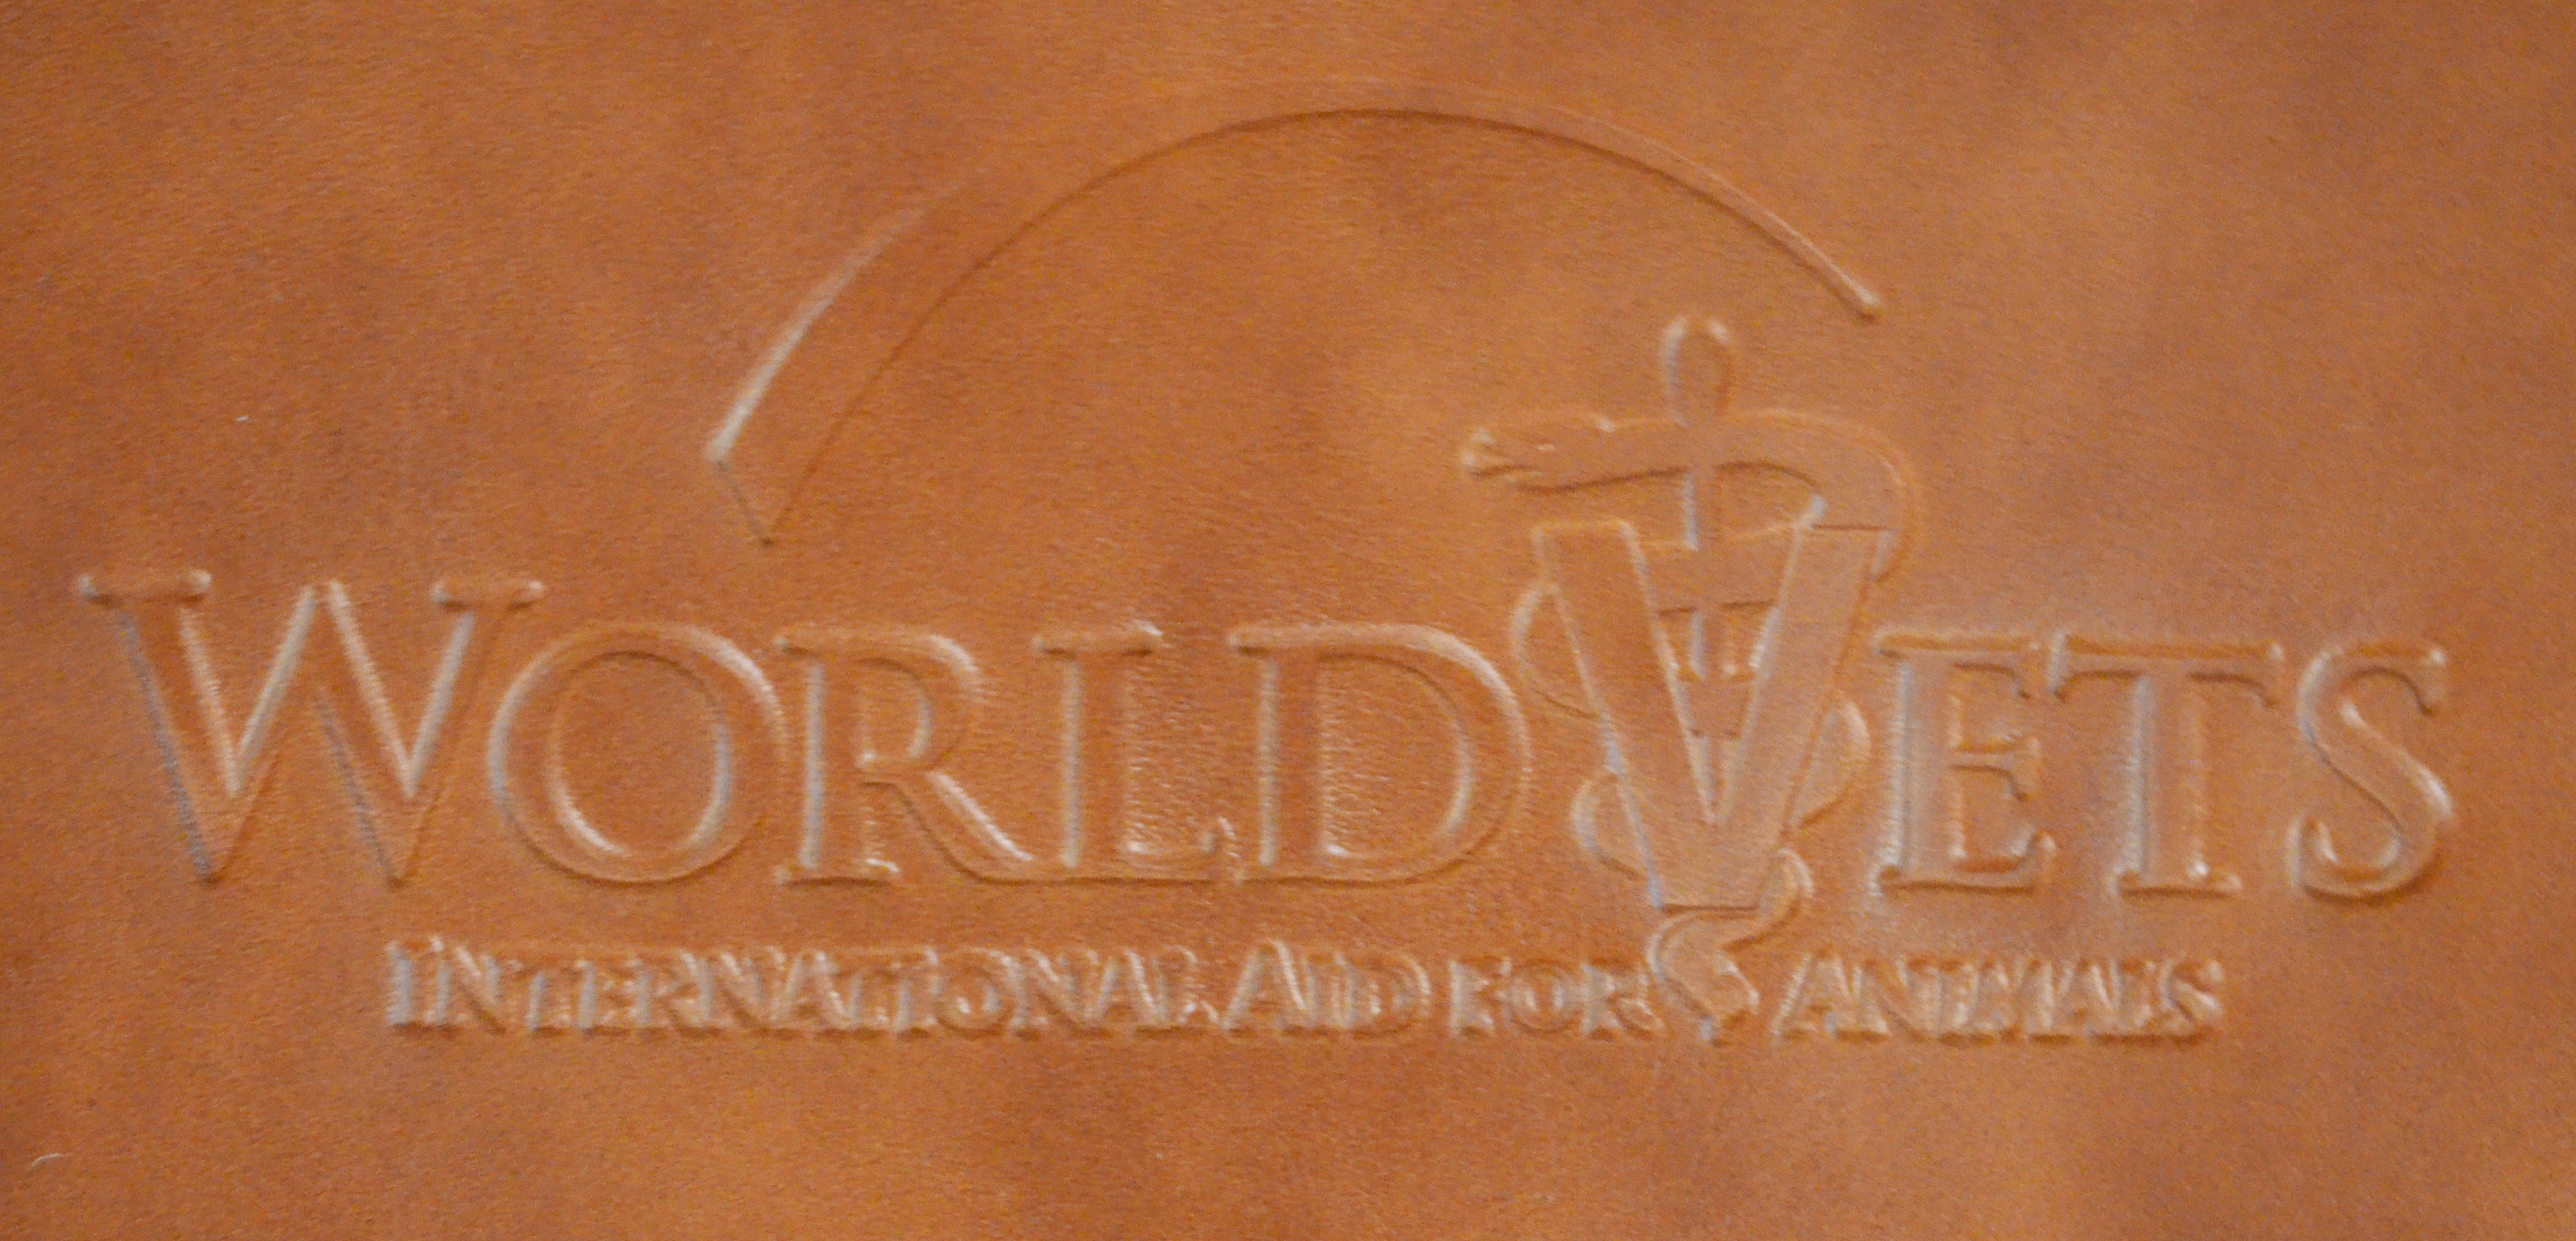 World Vets imprinted logo